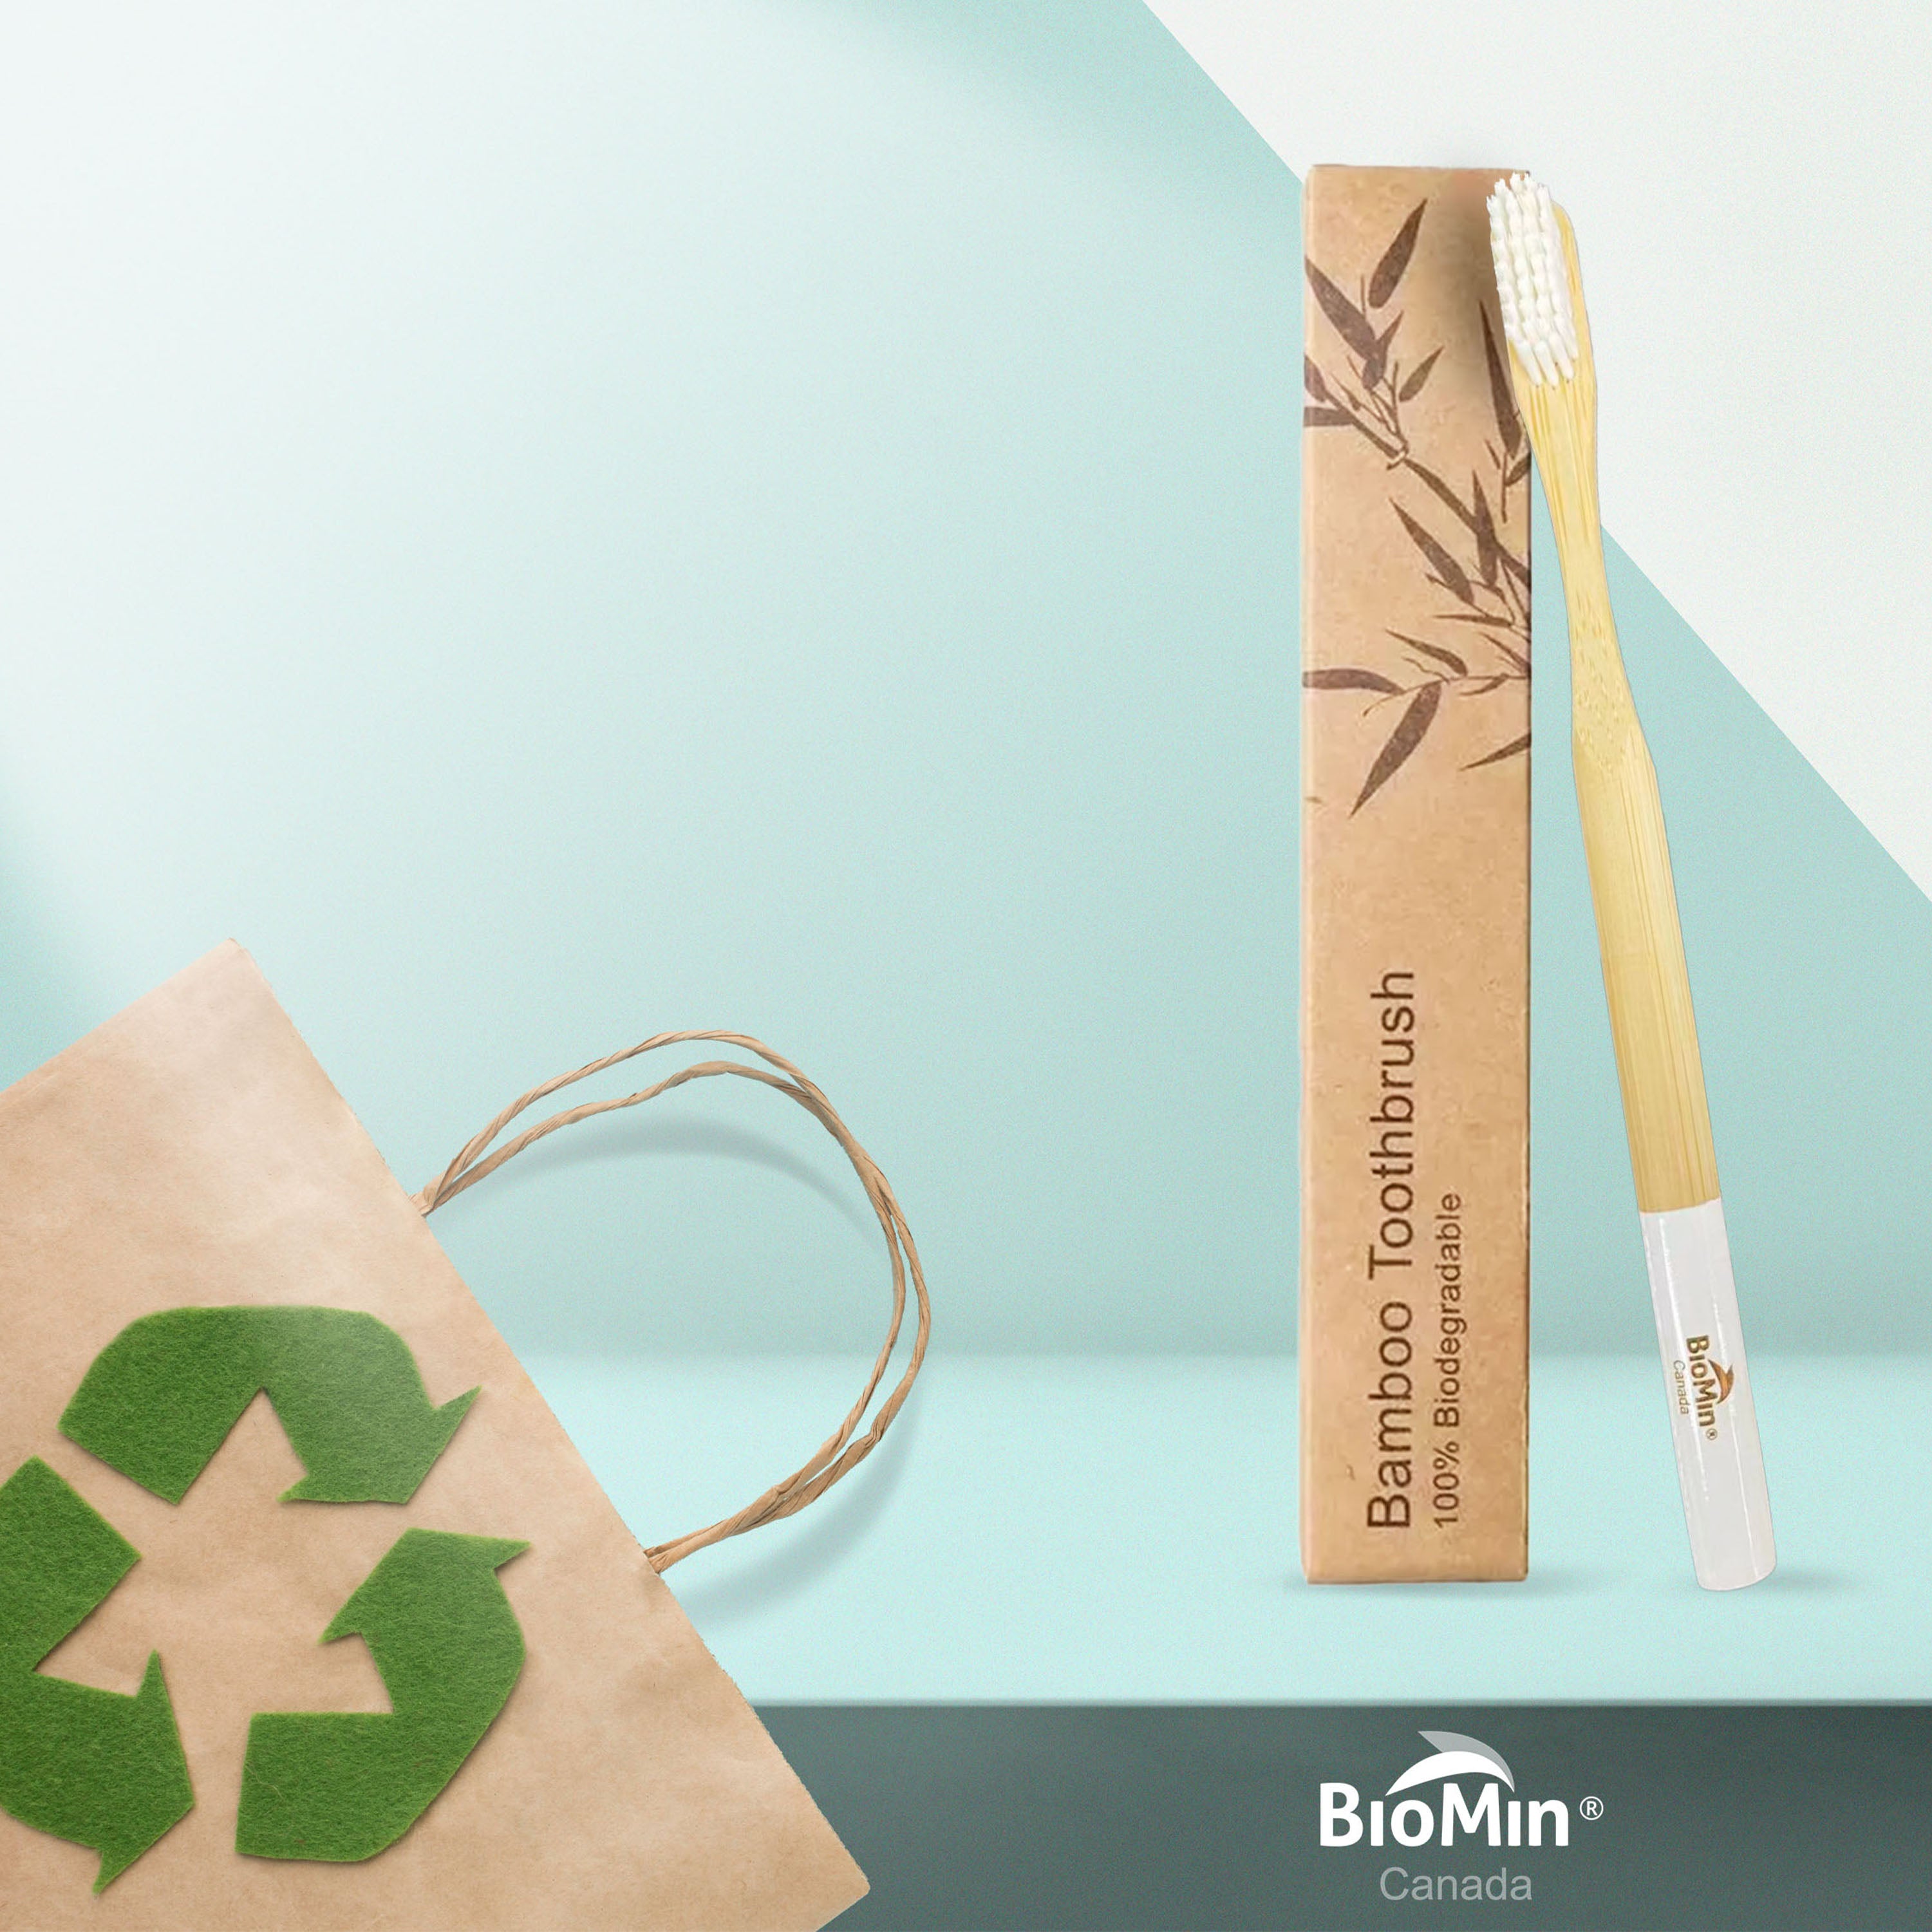 Cepillo de dientes de bambú biodegradable sostenible